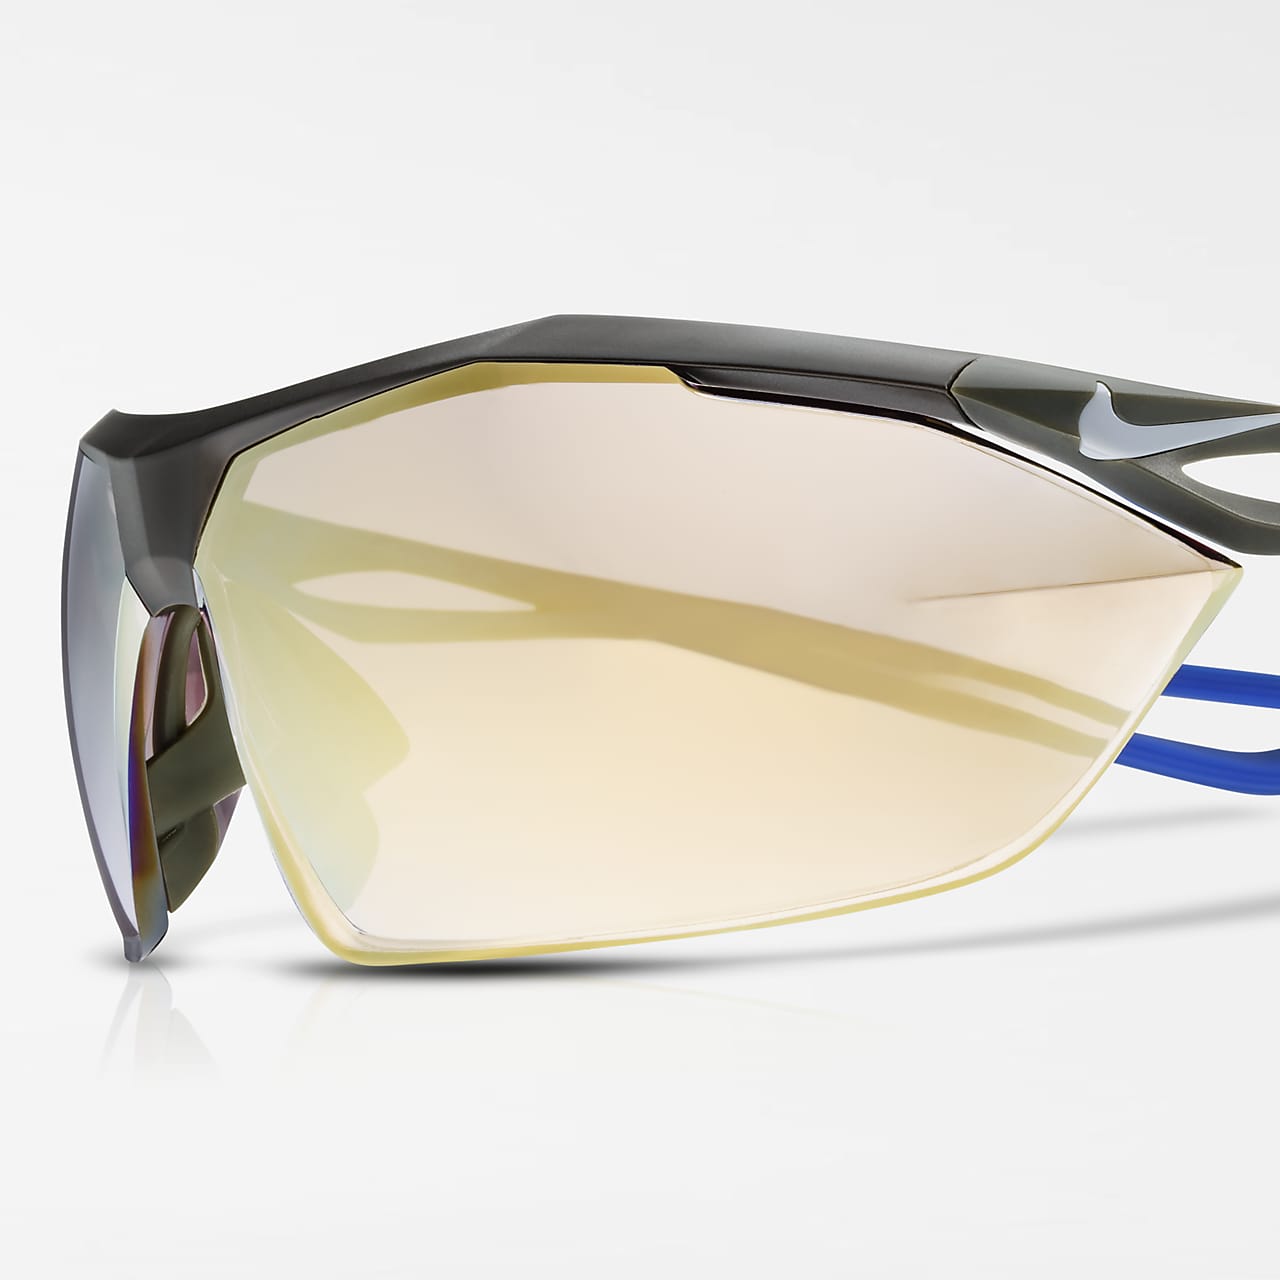 Nike Vaporwing Speed Tint Sunglasses